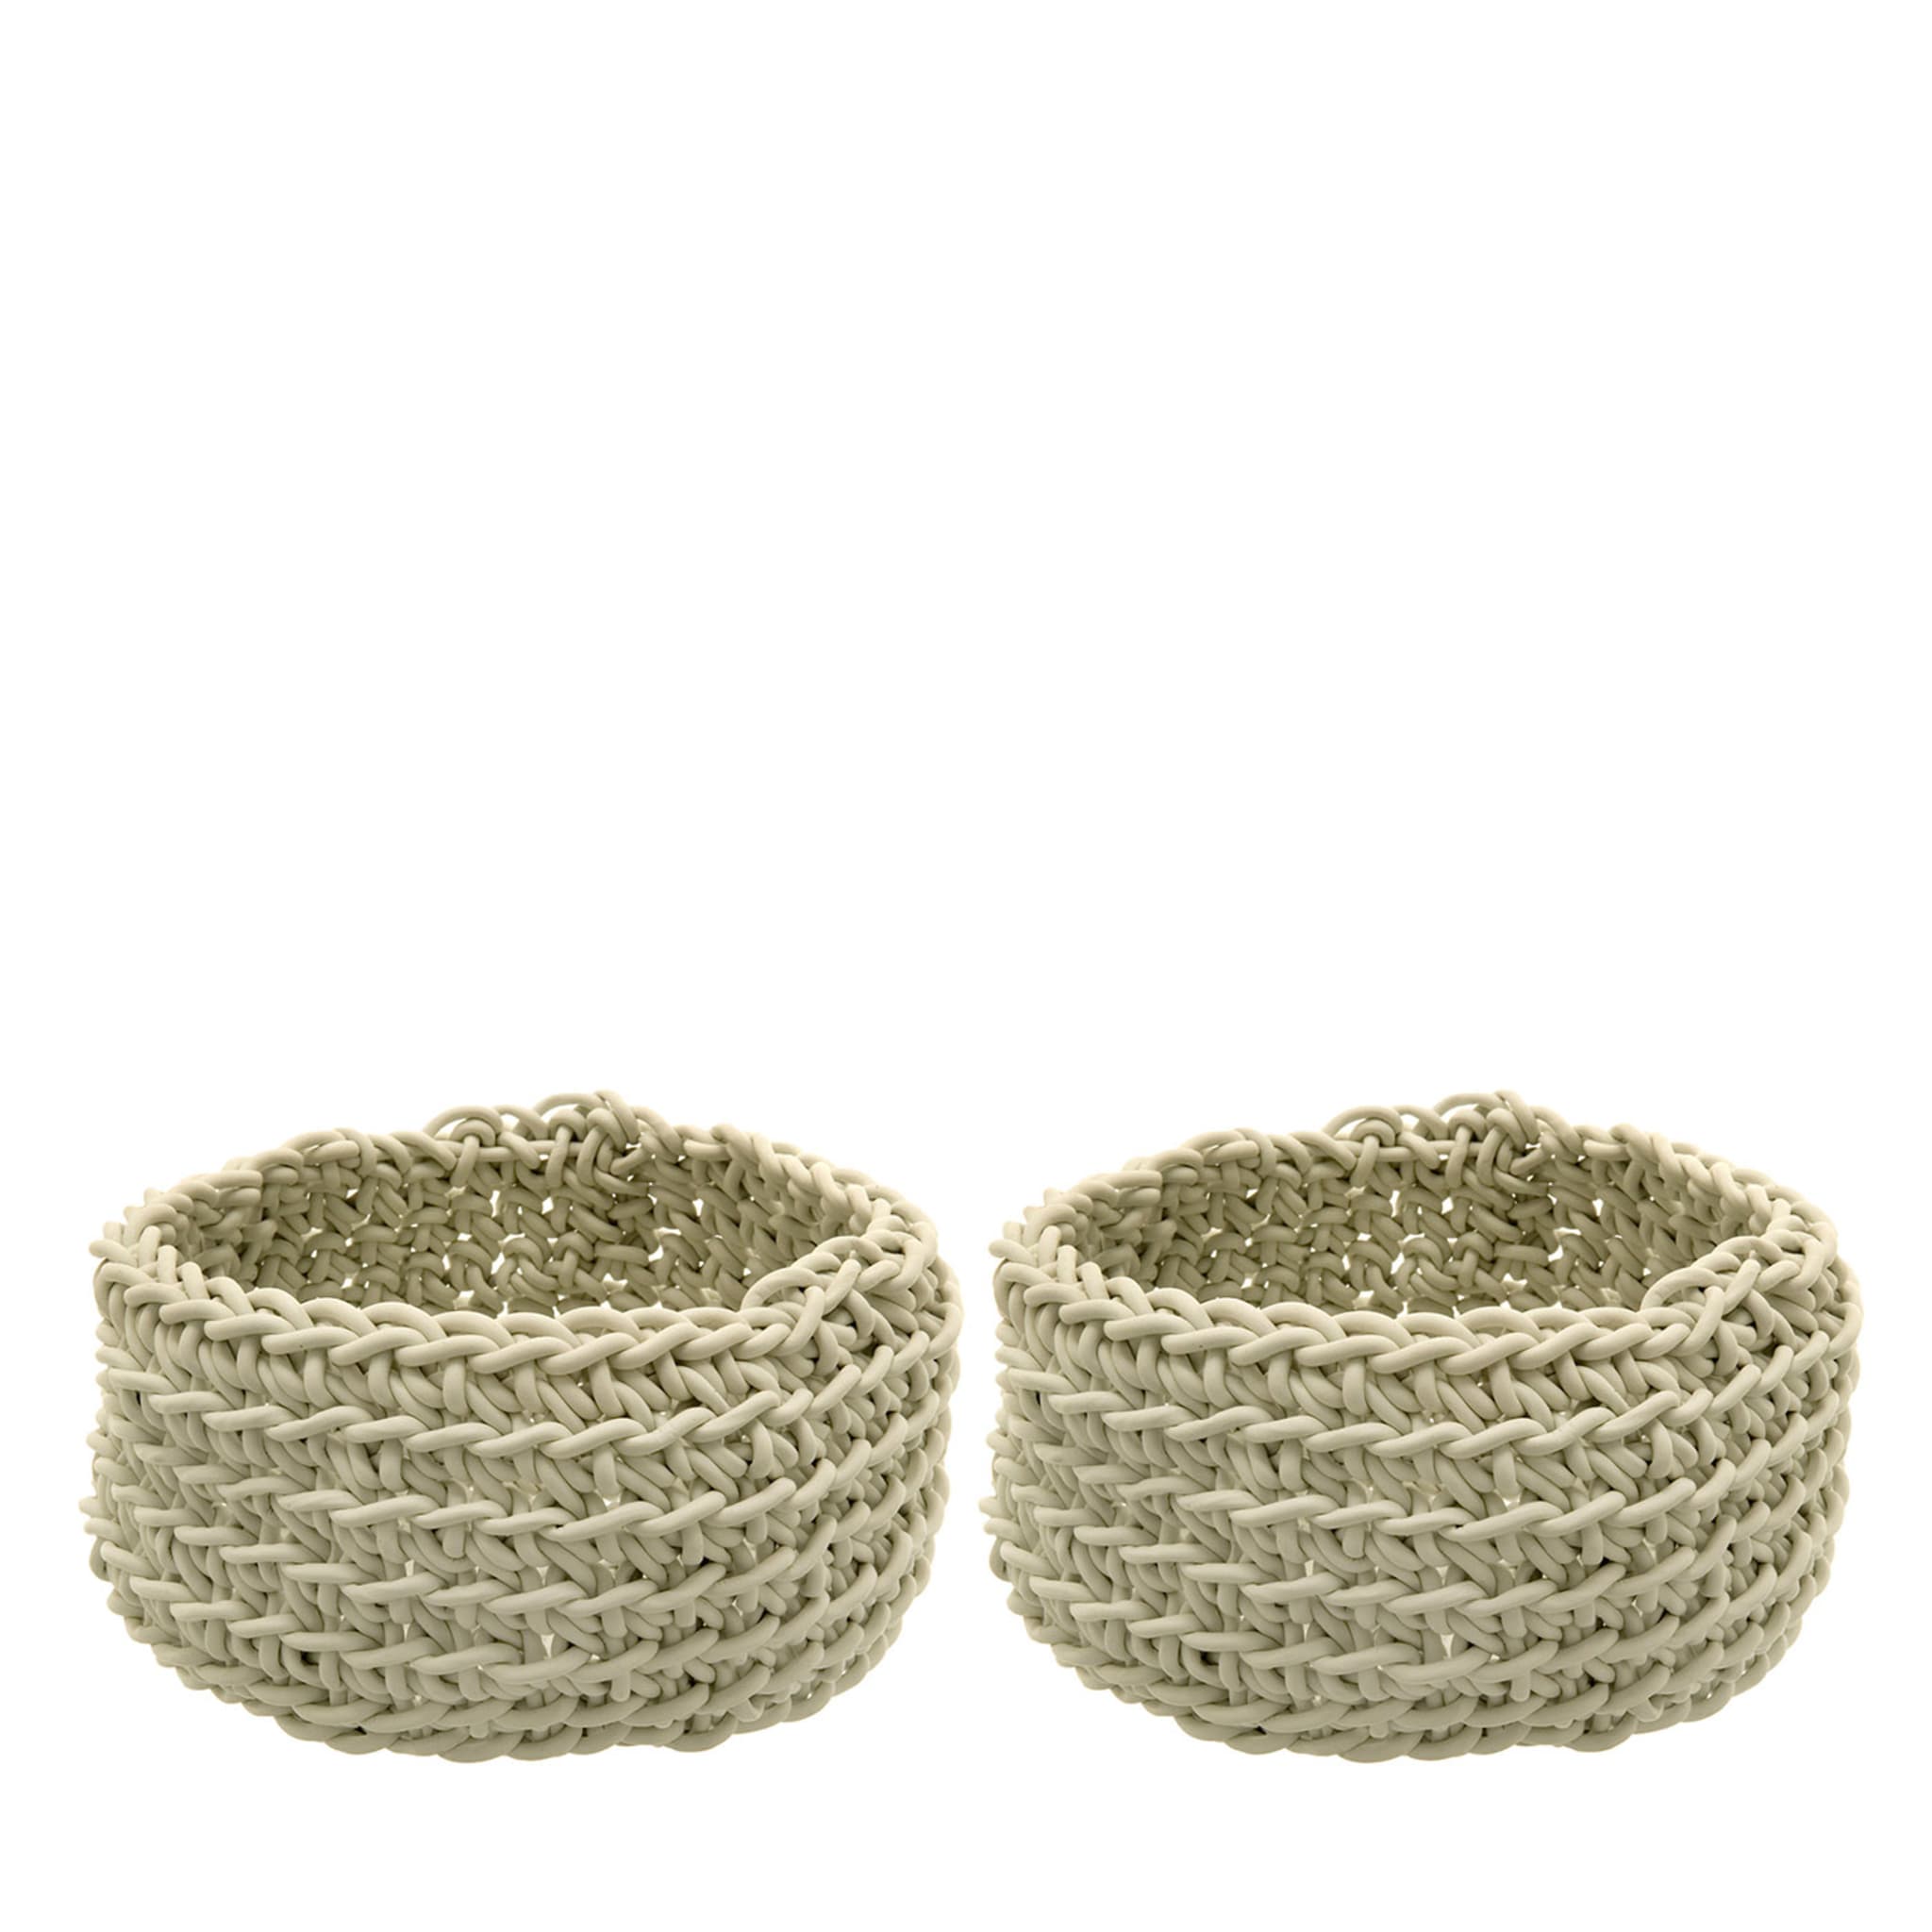 Set of 2 Sottile Ecru Baskets by Rosanna Contadini - Main view